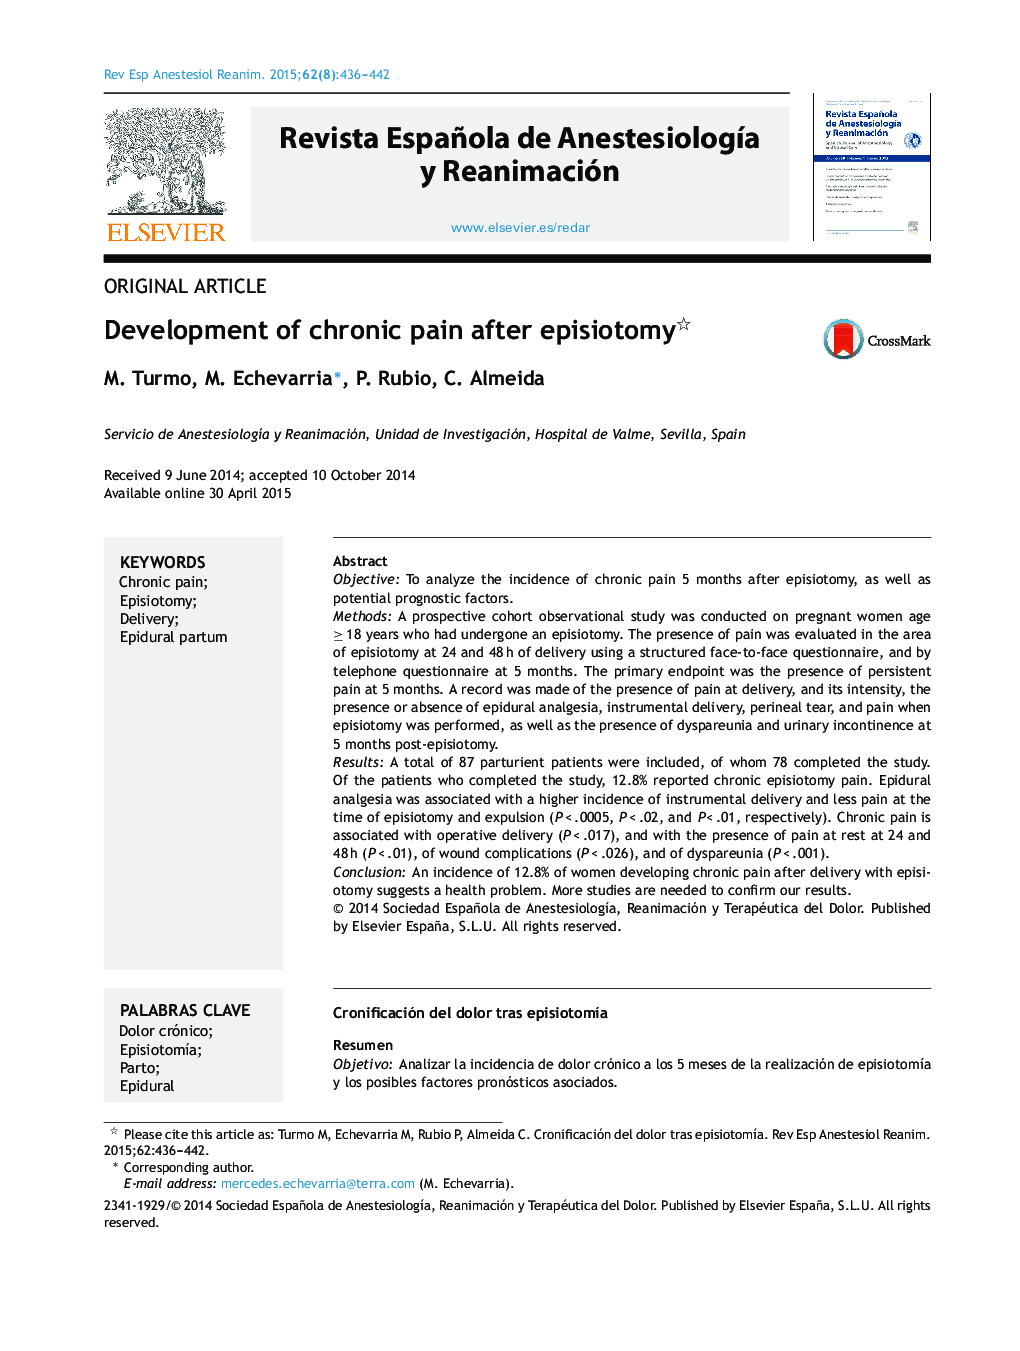 Development of chronic pain after episiotomy